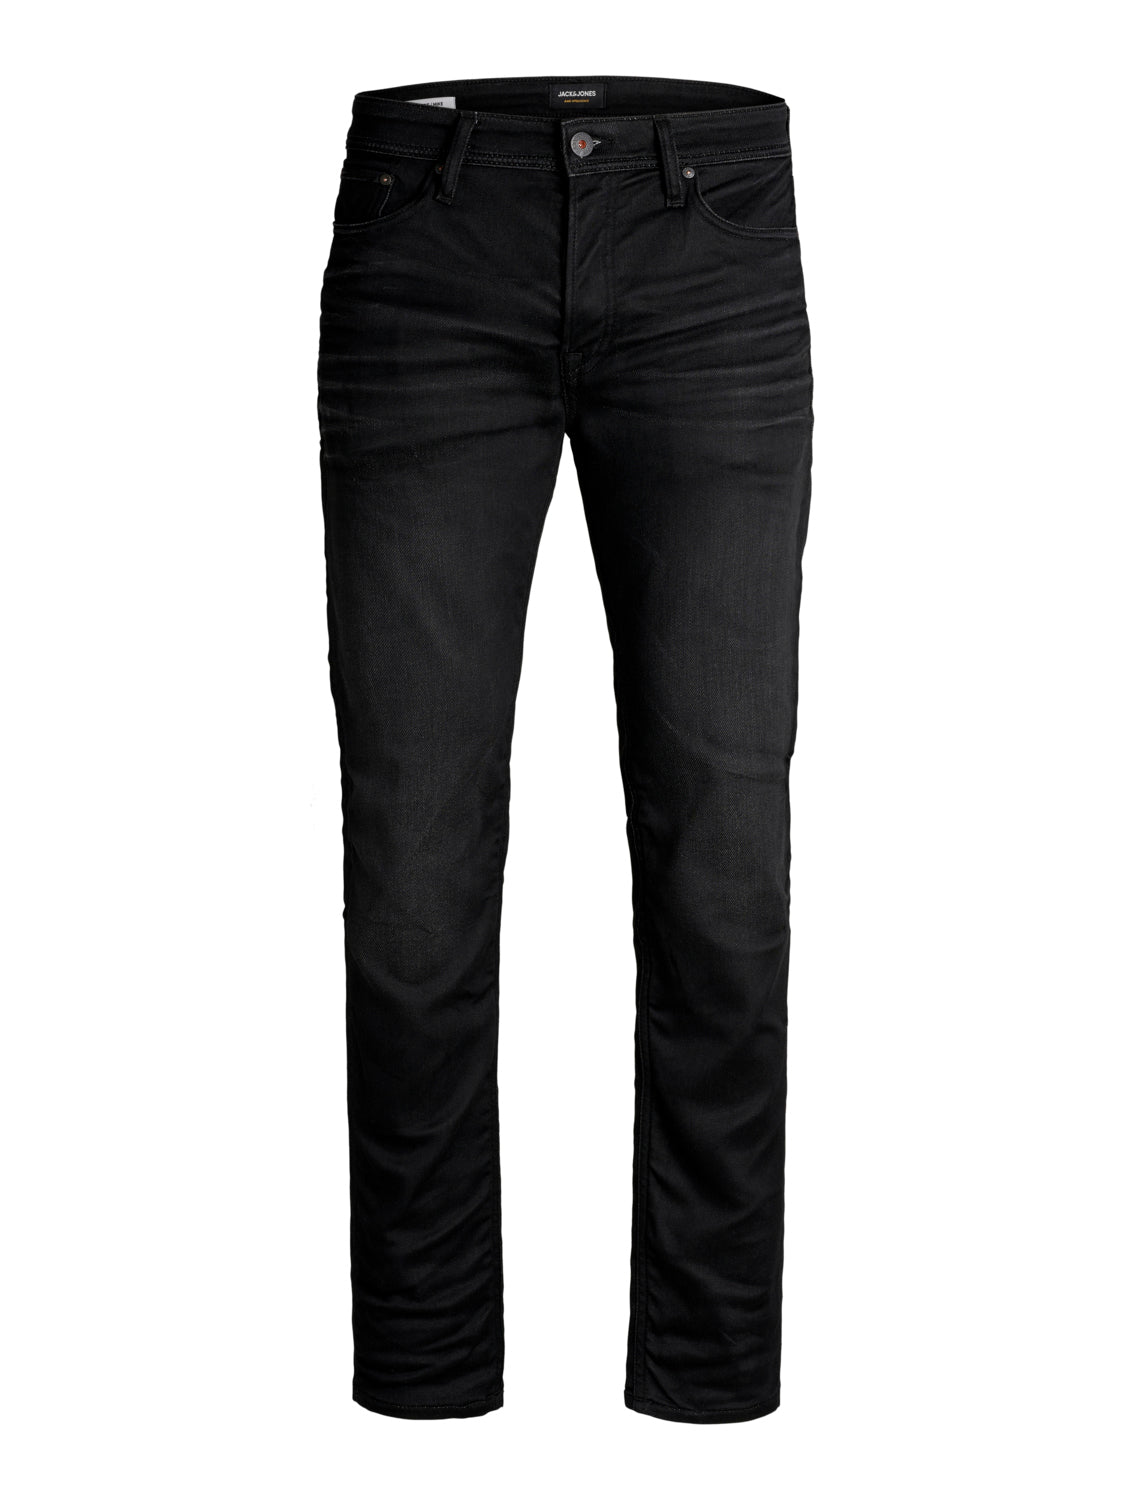 JJIMIKE Jeans - black denim